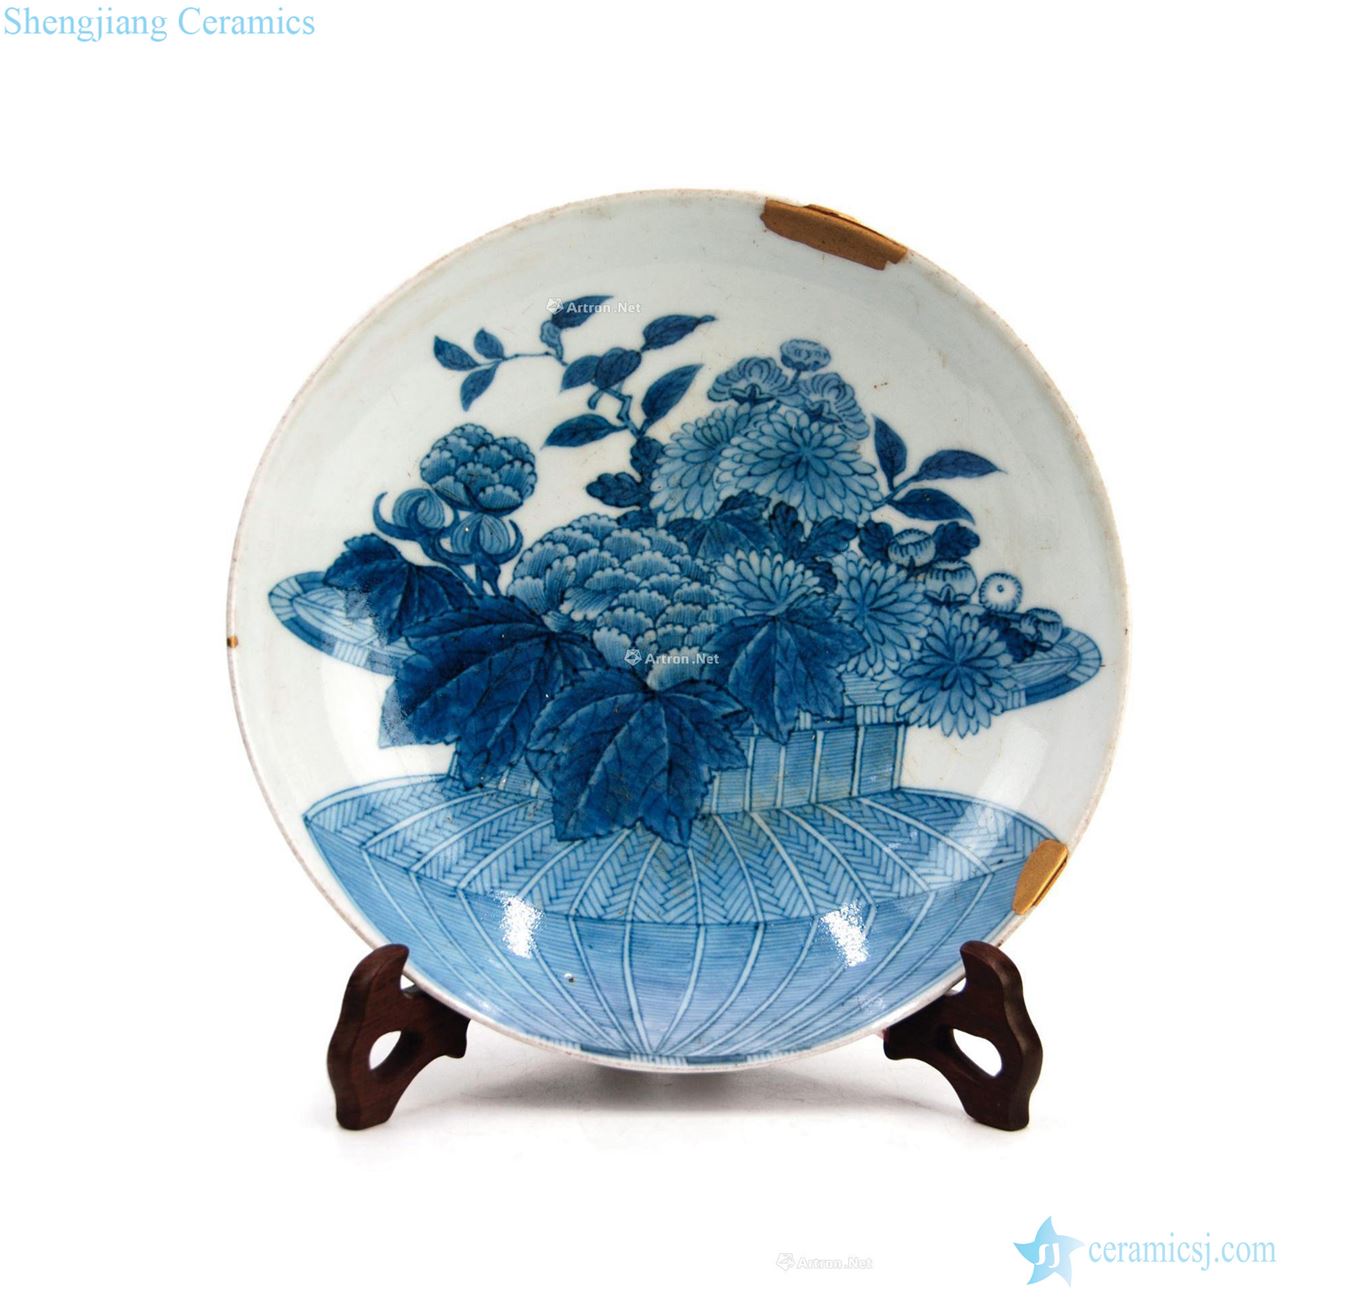 Edo period Blue and white porcelain plate